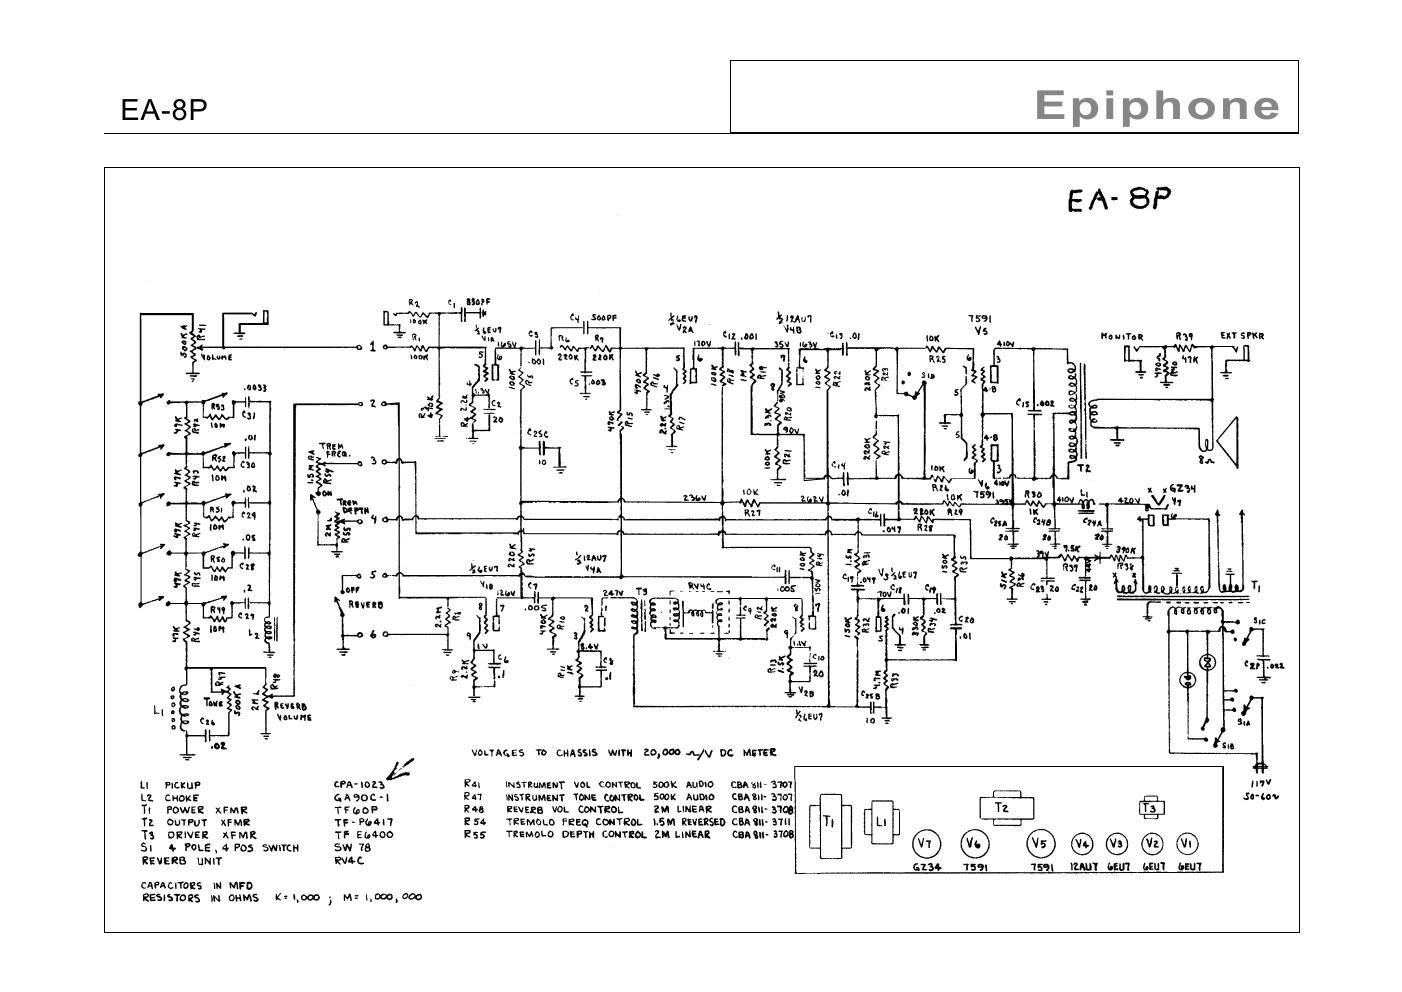 epiphone ea 8p the professional schematic